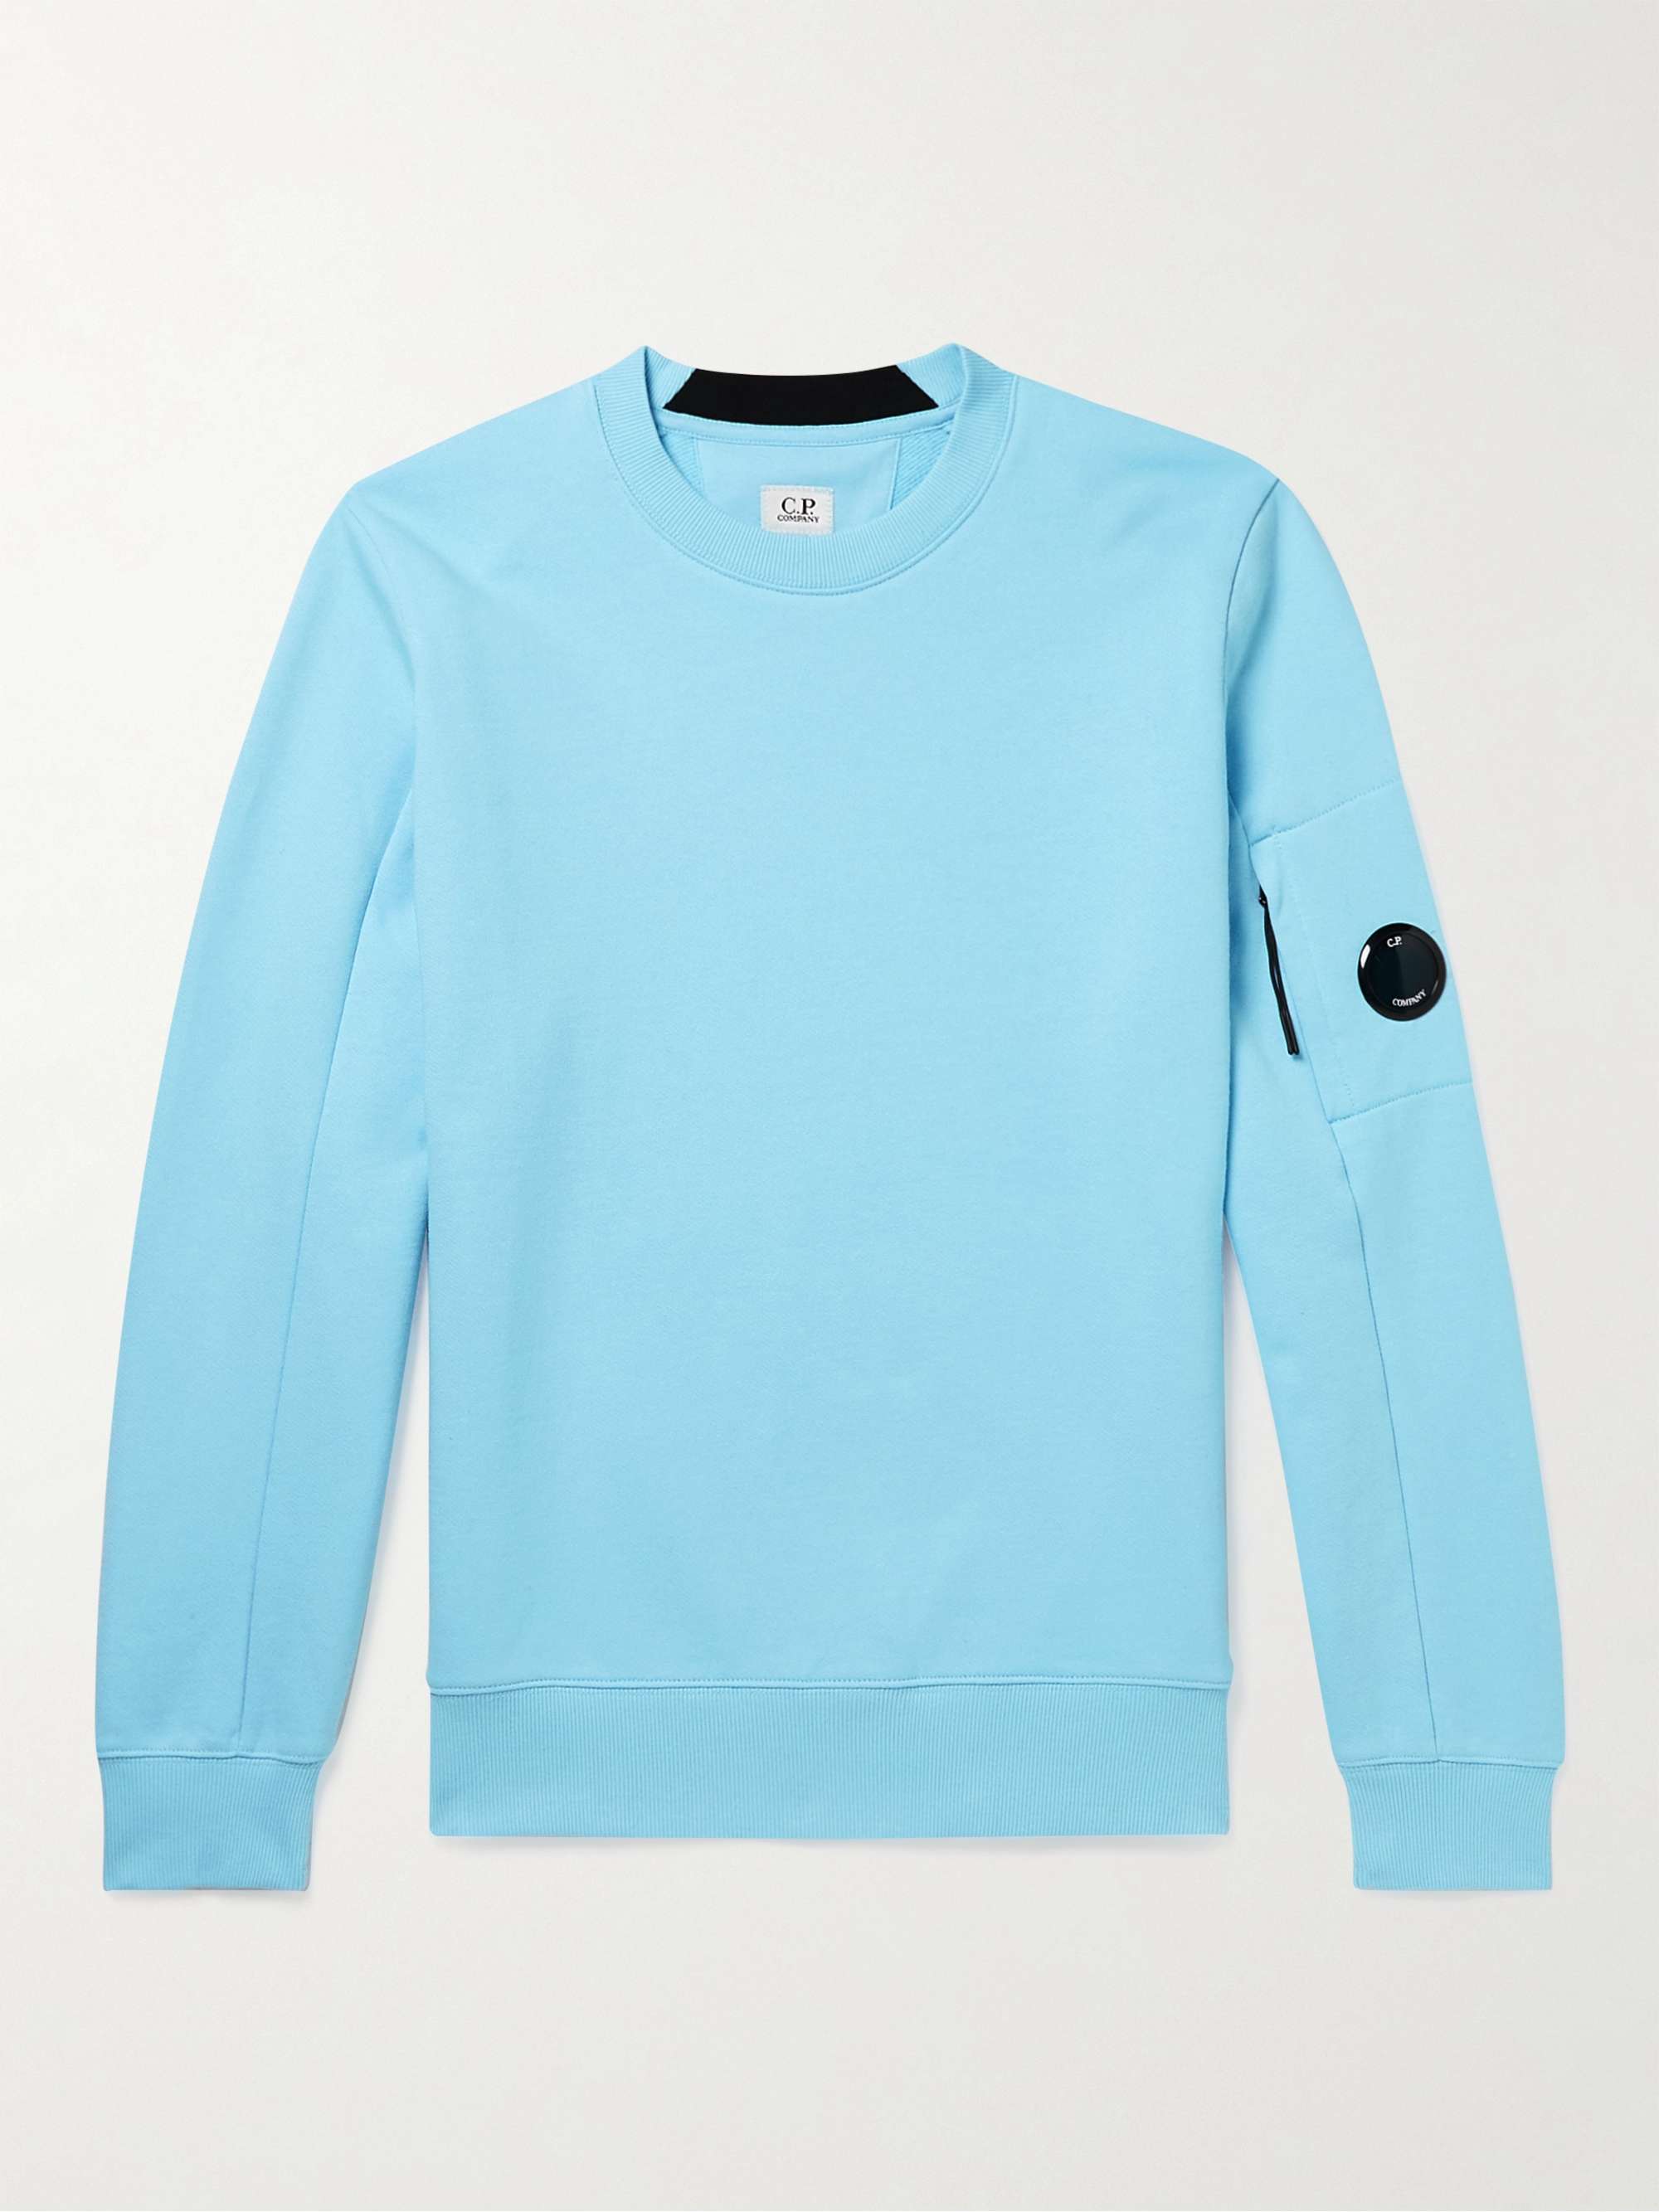 C.P. COMPANY Logo-Embellished Cotton-Jersey Sweatshirt